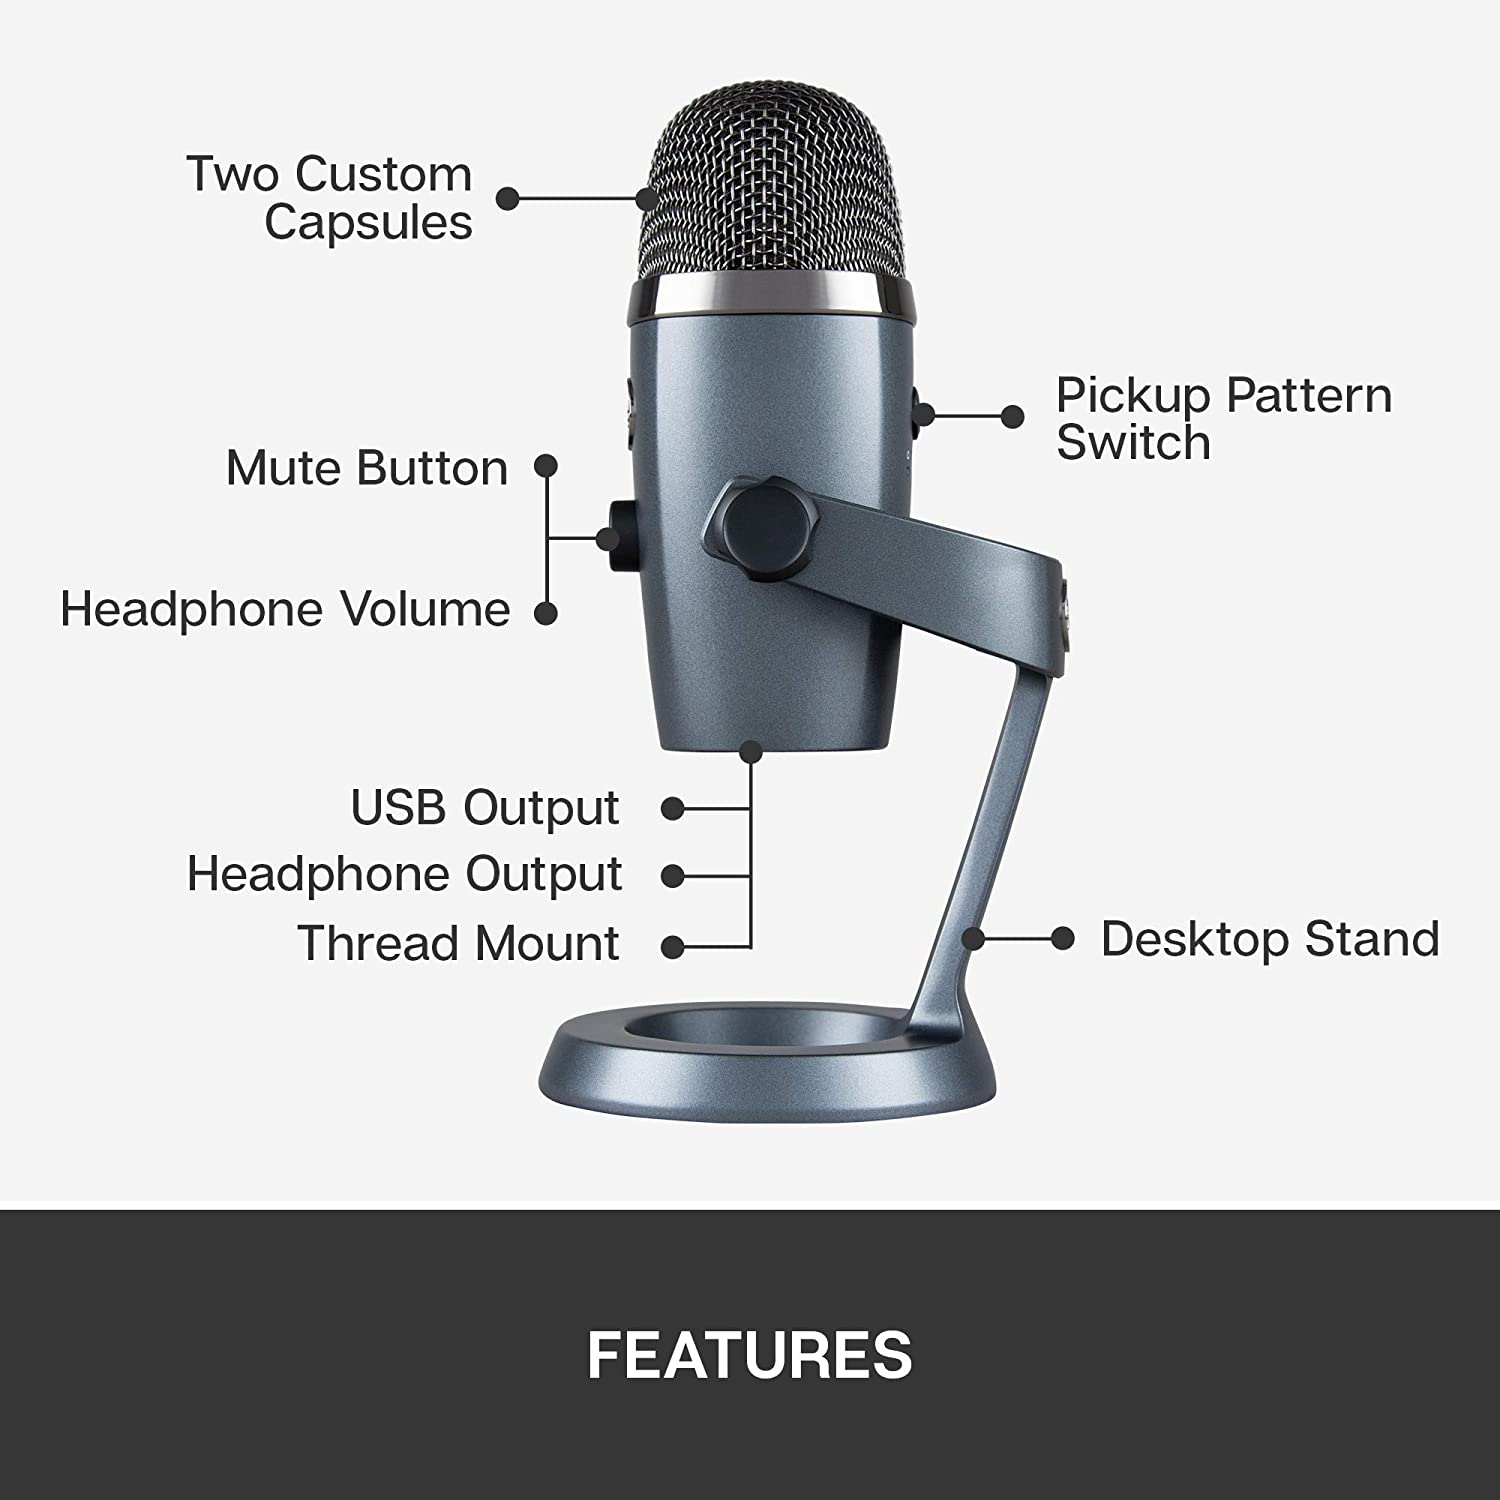 Micrófono USB, micrófono condensador para podcast para computadora, Mac,  Smartphone, micrófono para juegos Plug & Play con silencio rápido LED